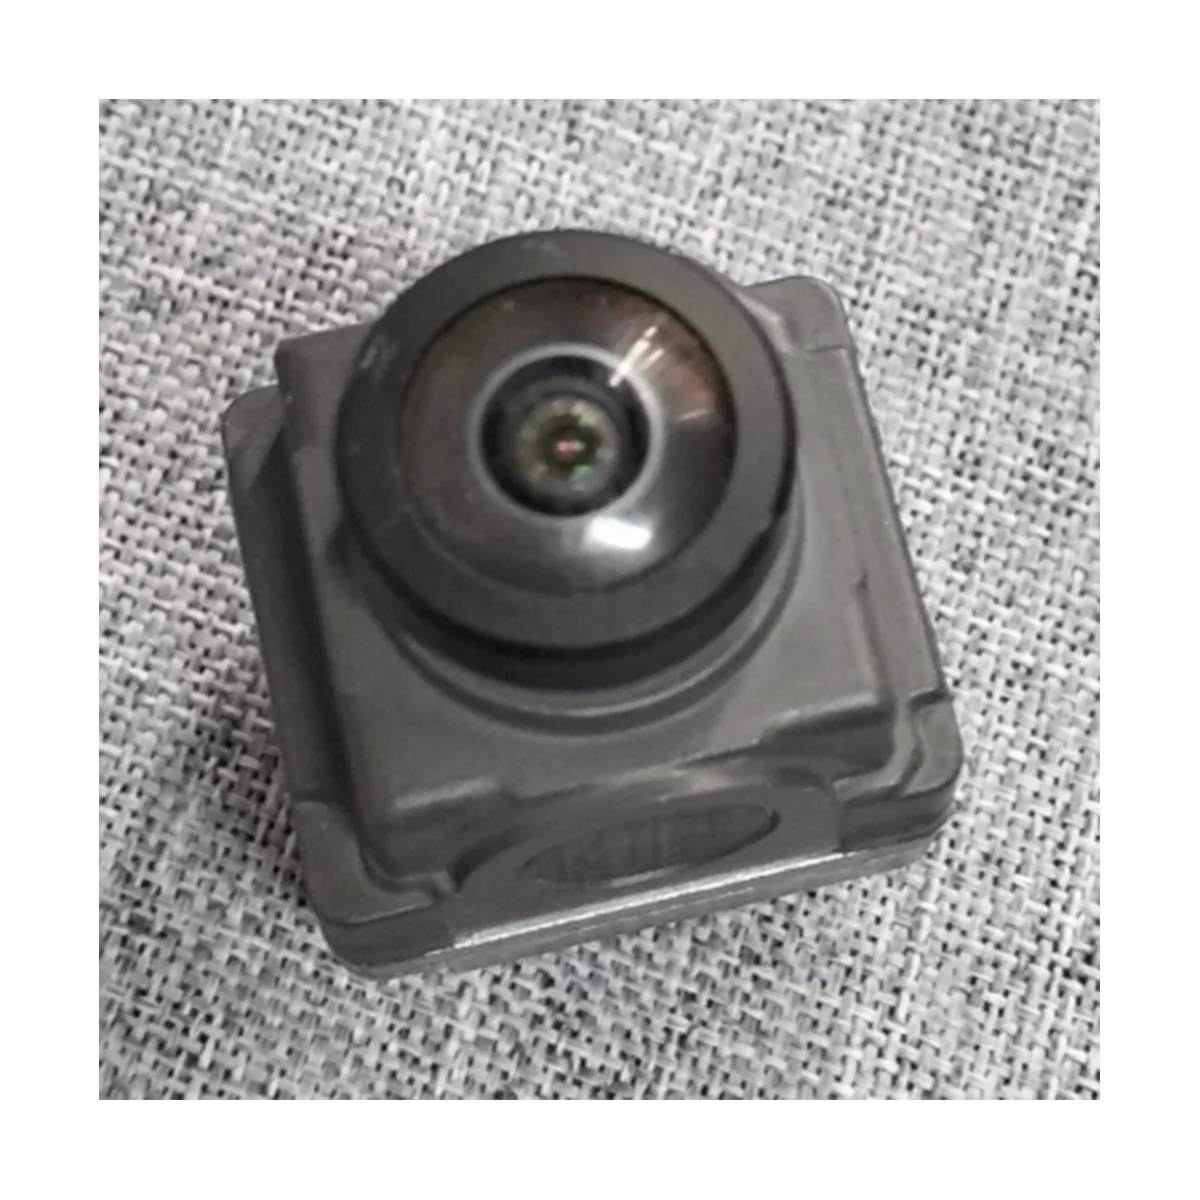 

Car Rear View Camera Reverse LR095387 LR078535 for Range Rover Sport Evoque GJ32-19G590-BC Trunk Parking Assist Camera